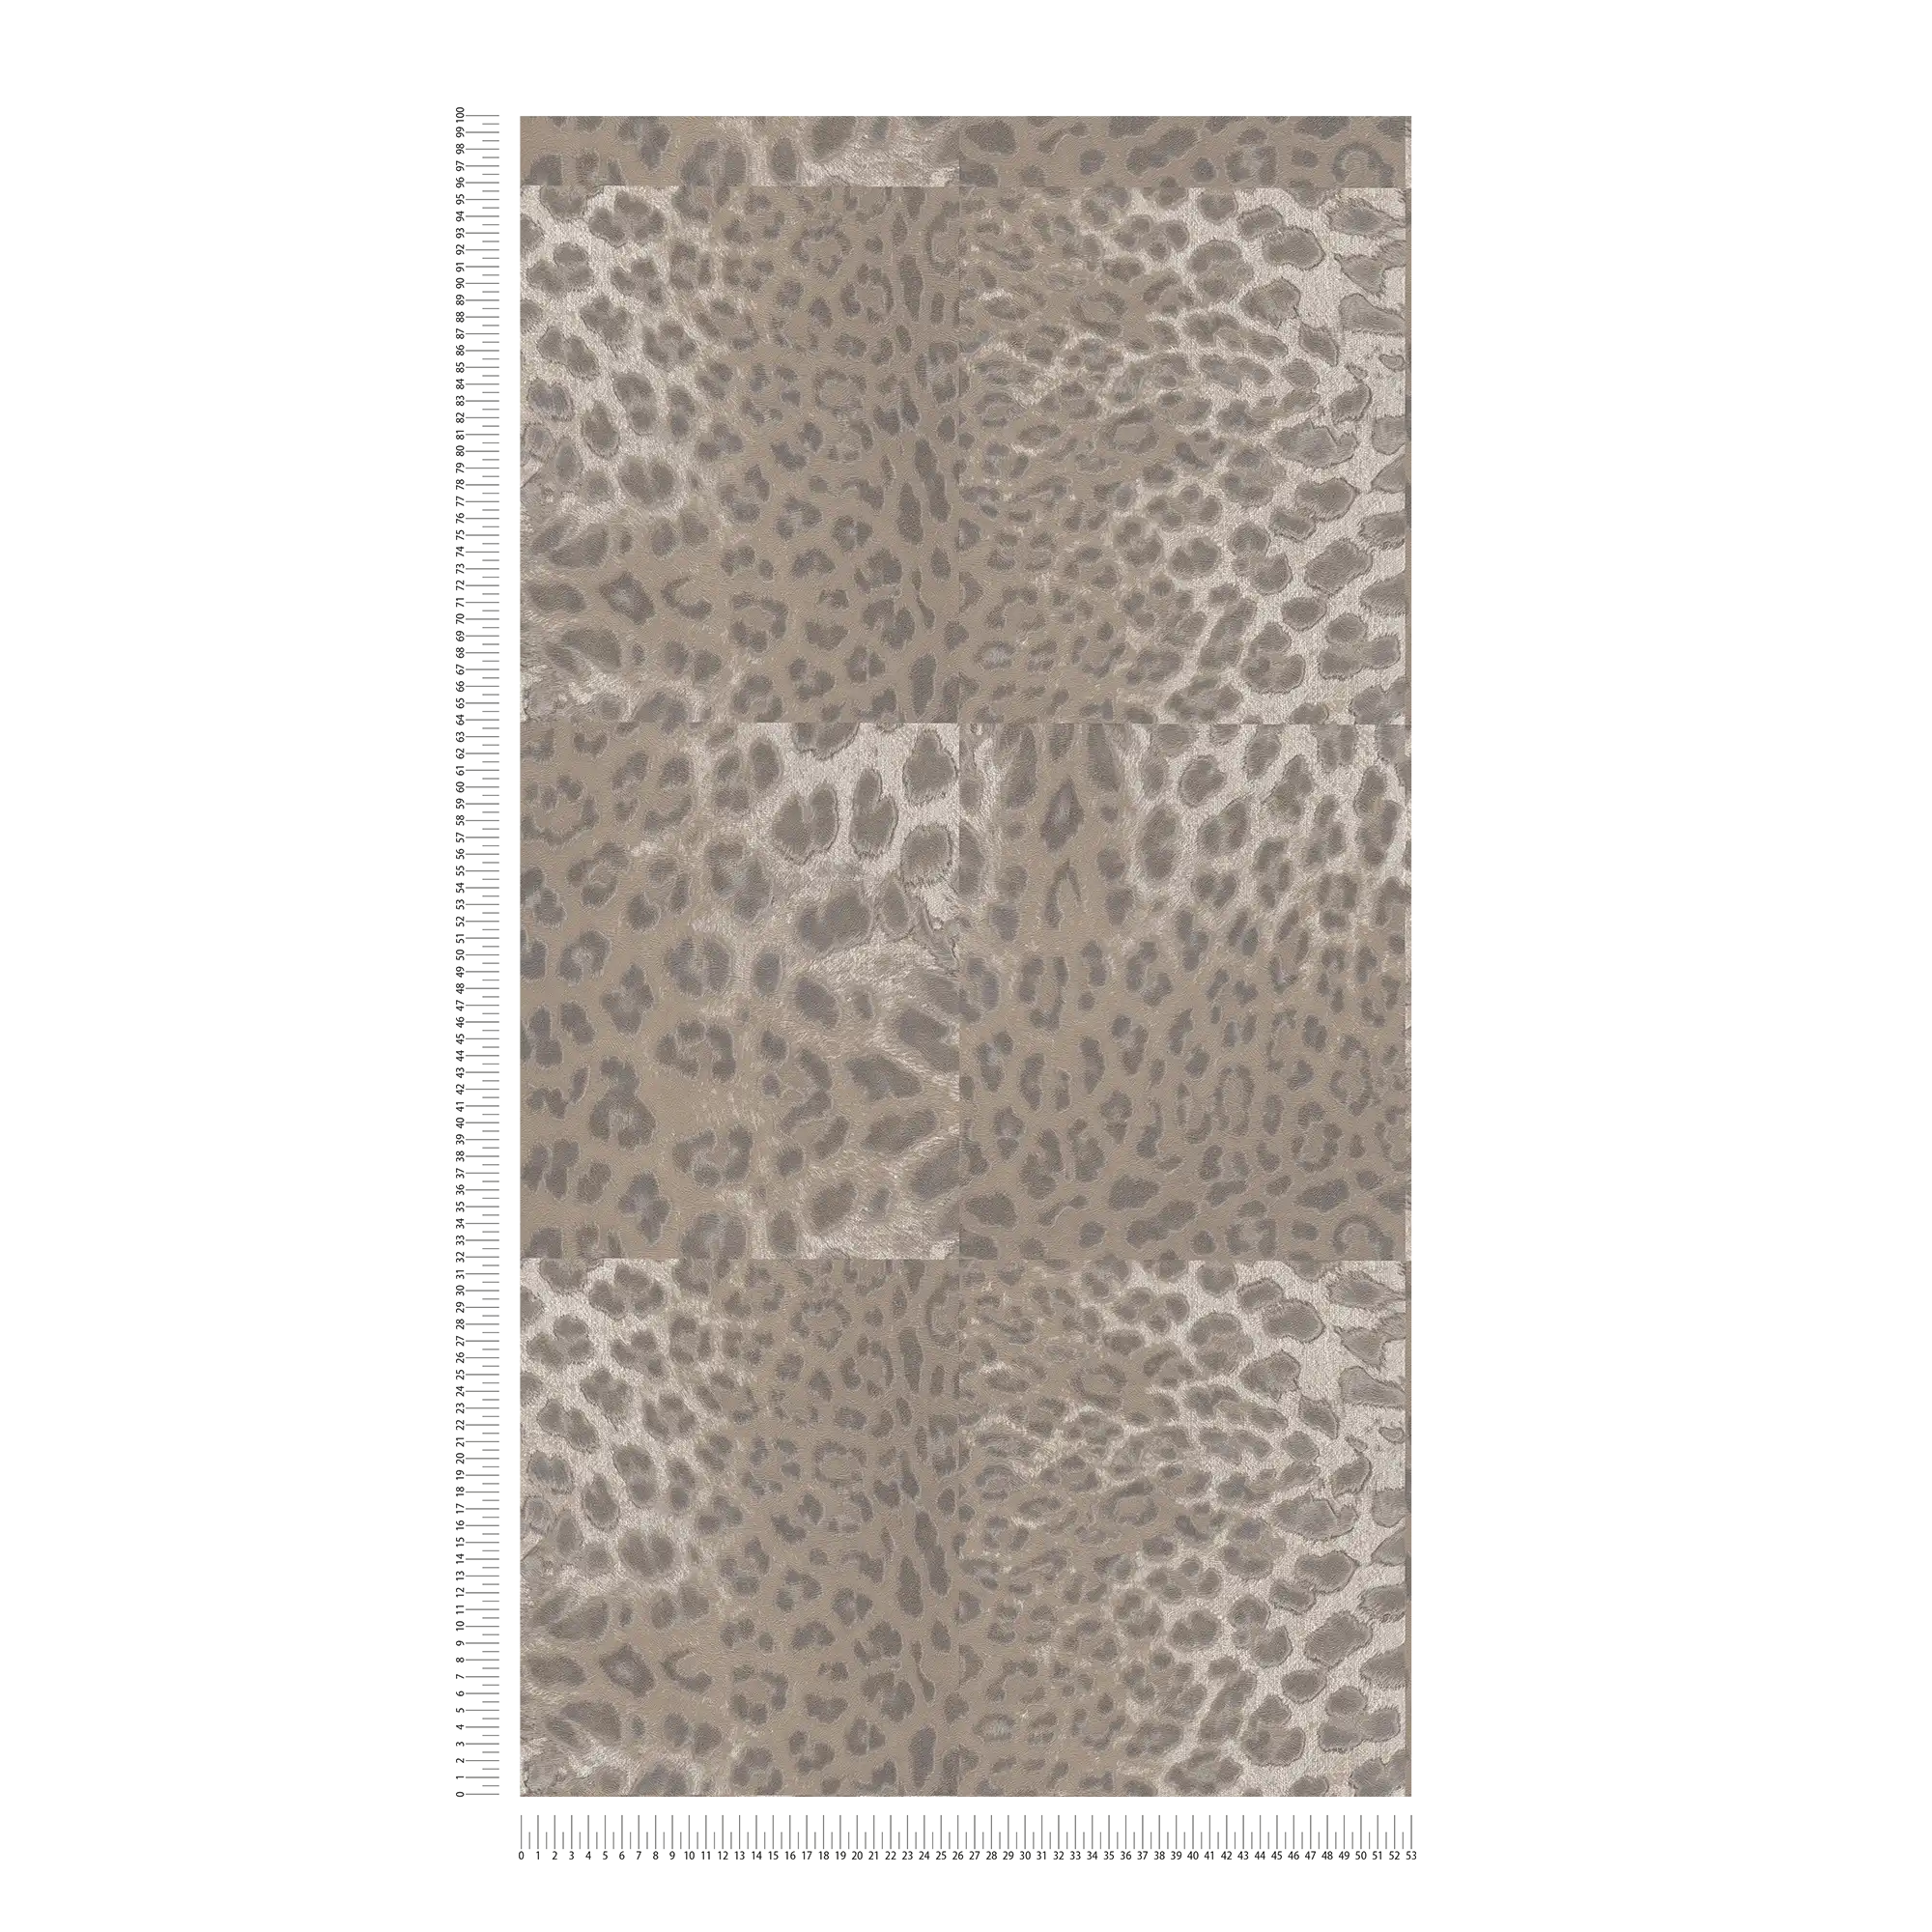             Dierenprint luipaard behang - Beige, Metallic
        